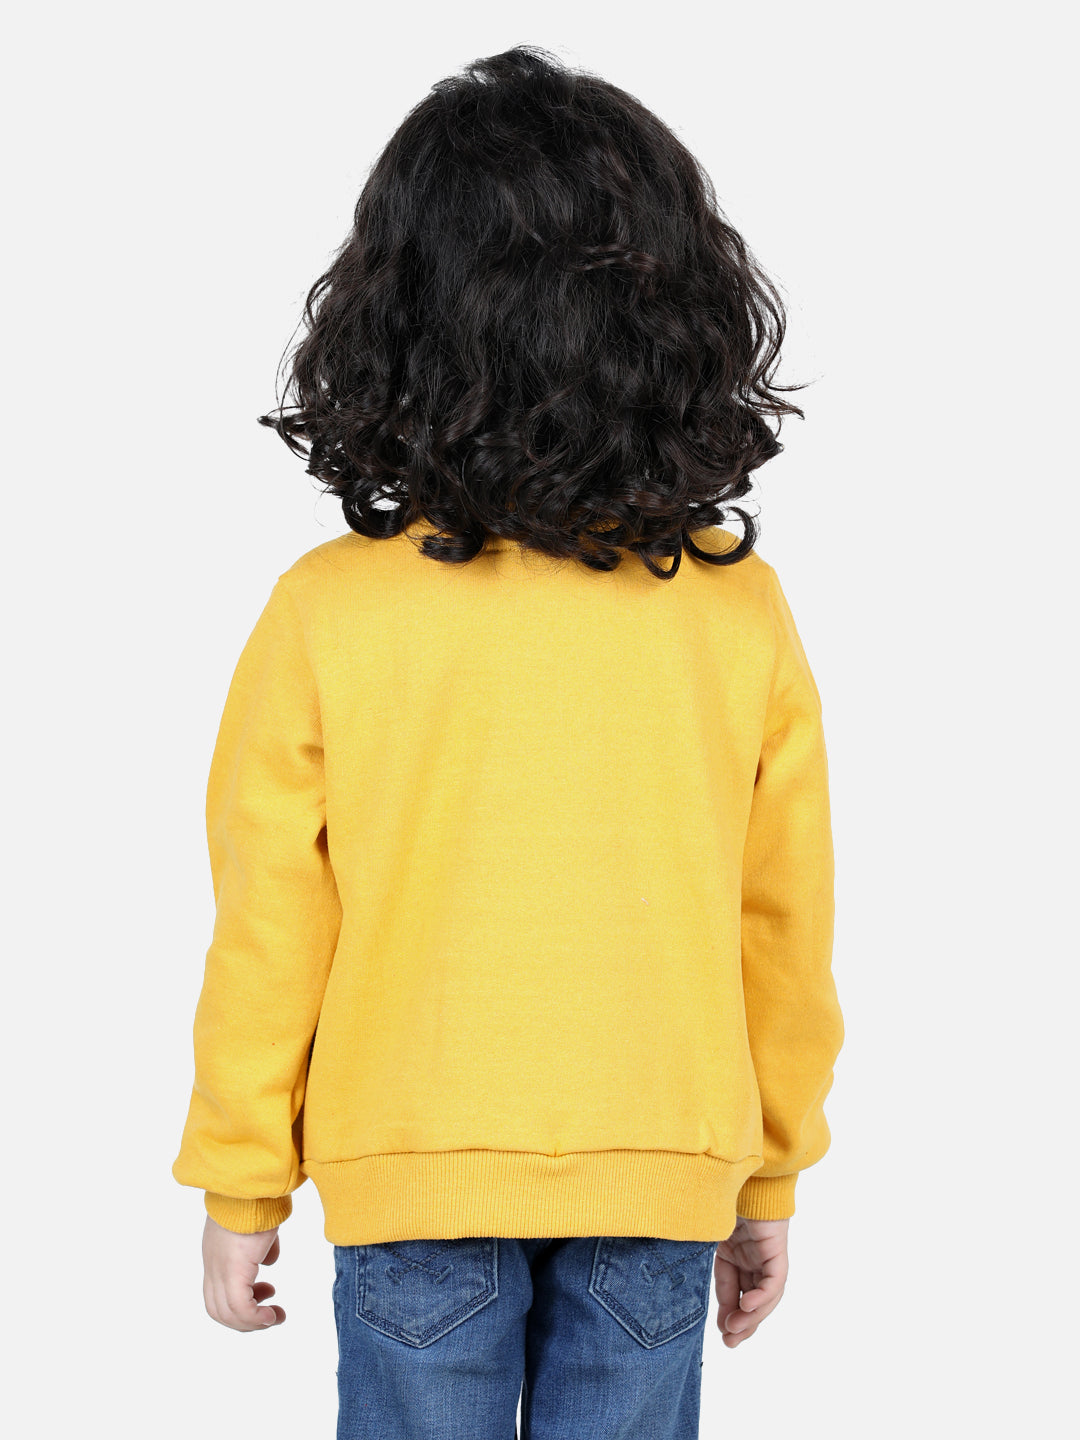 BownBee Full Sleeve Sweatshirt for Boys- Yellow